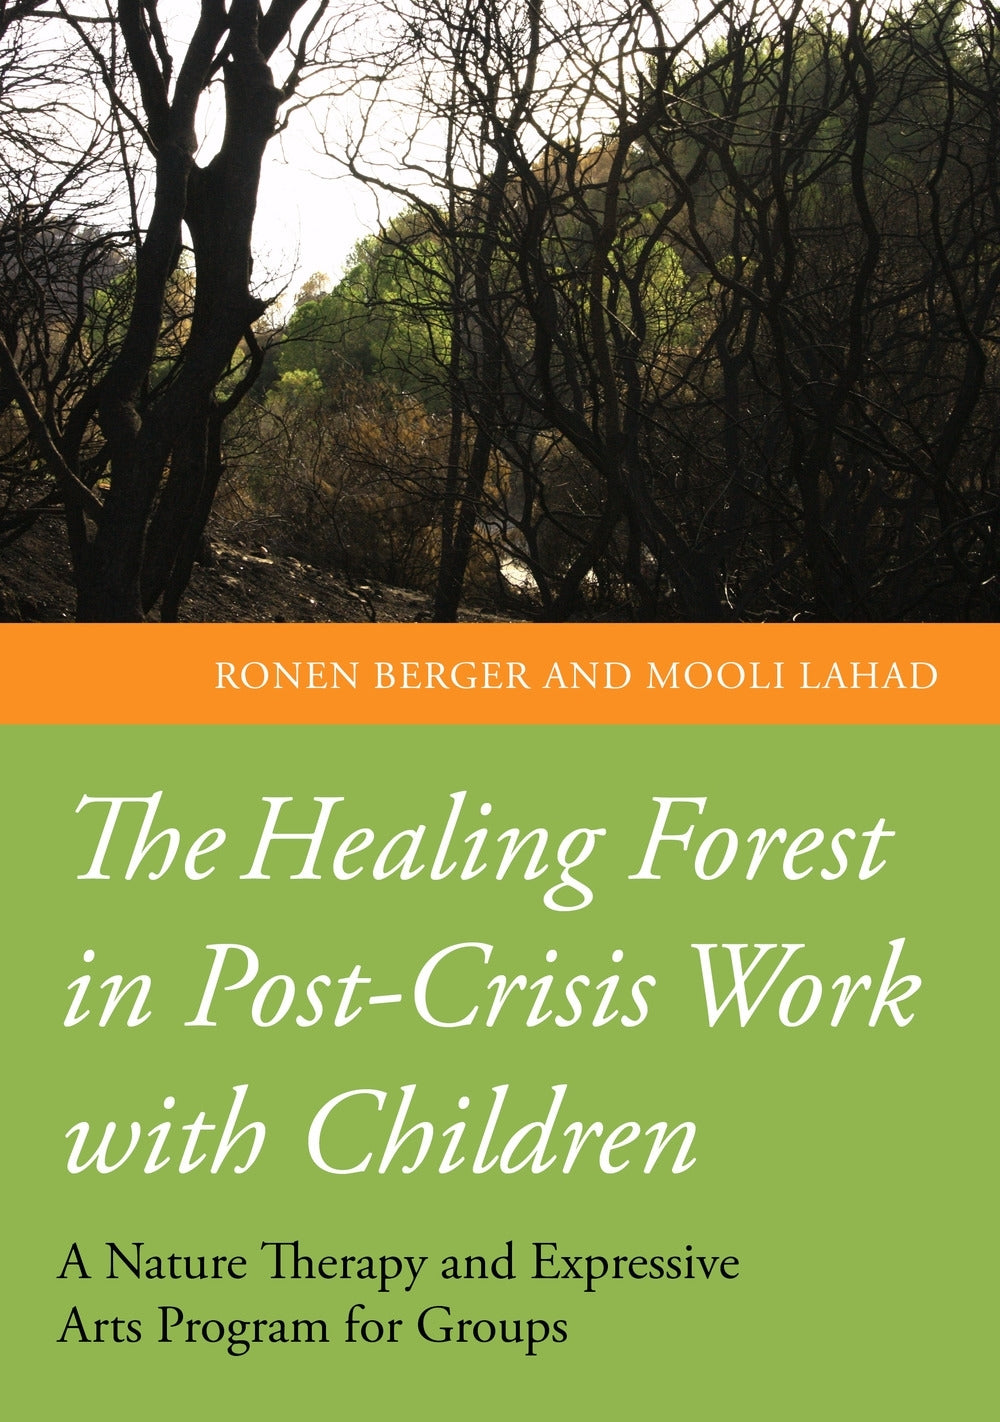 The Healing Forest in Post-Crisis Work with Children by Professor Mooli Lahad, Igor Kovyar, Ronen Berger